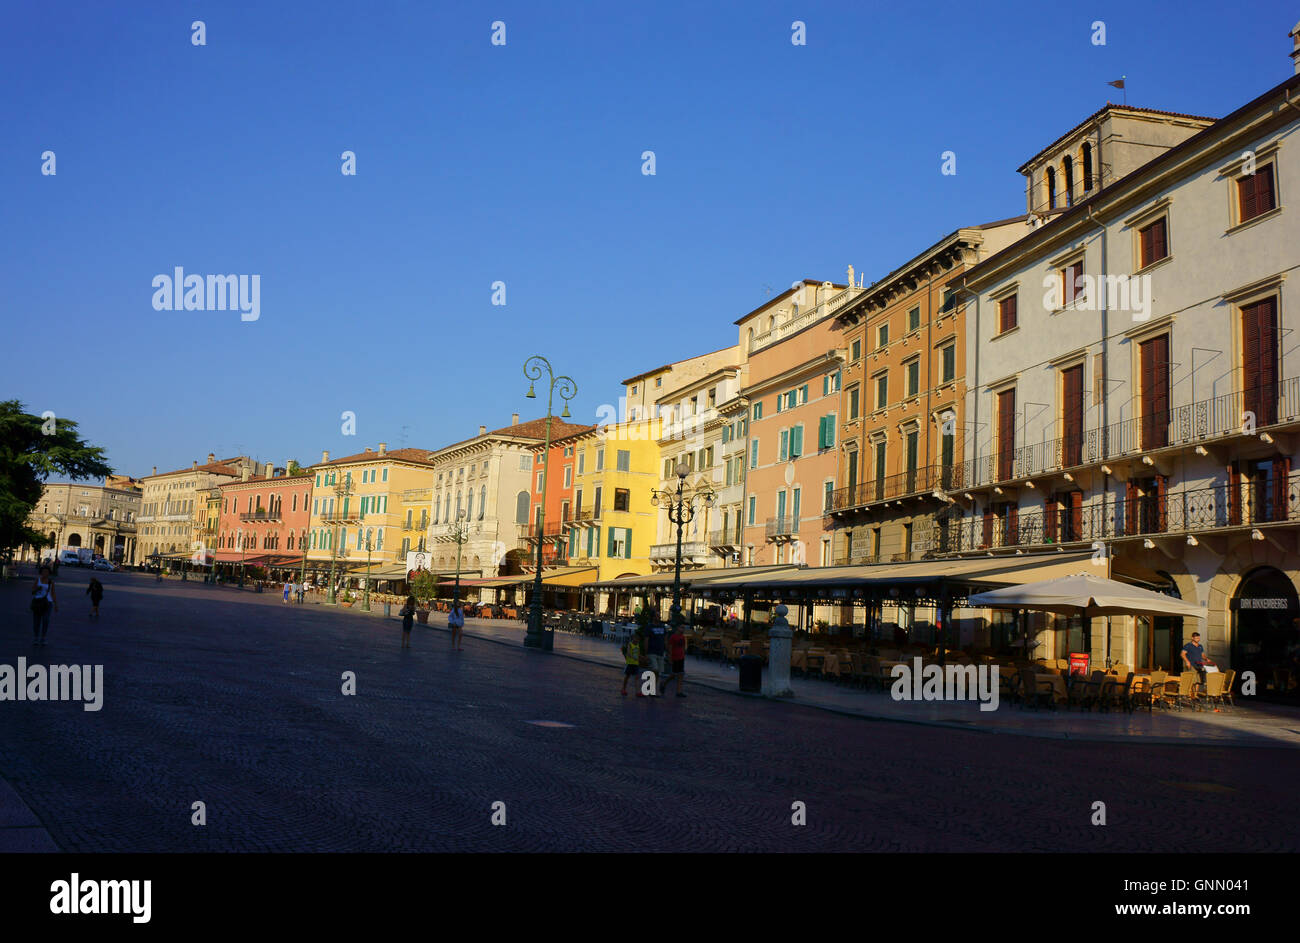 Houses and restaurants at Piazza Bra, early mornings, Verona Italy Stock Photo